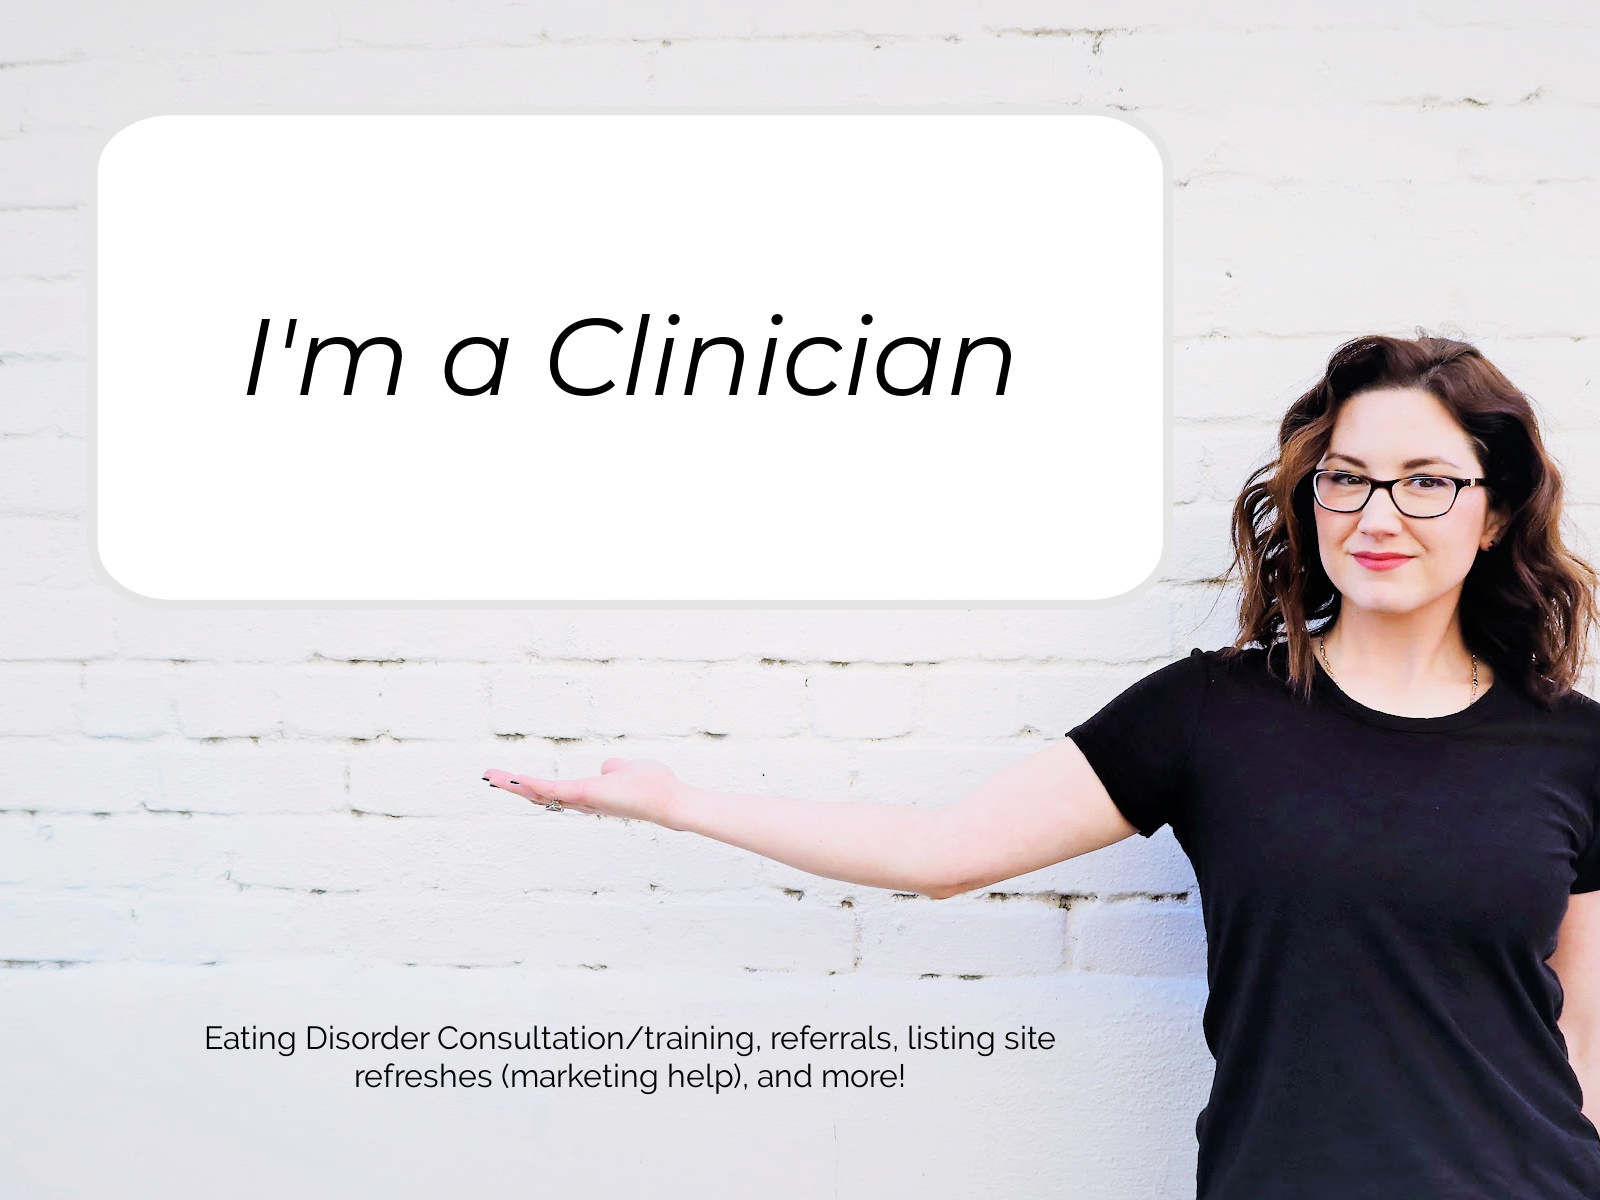 I'm a clinician